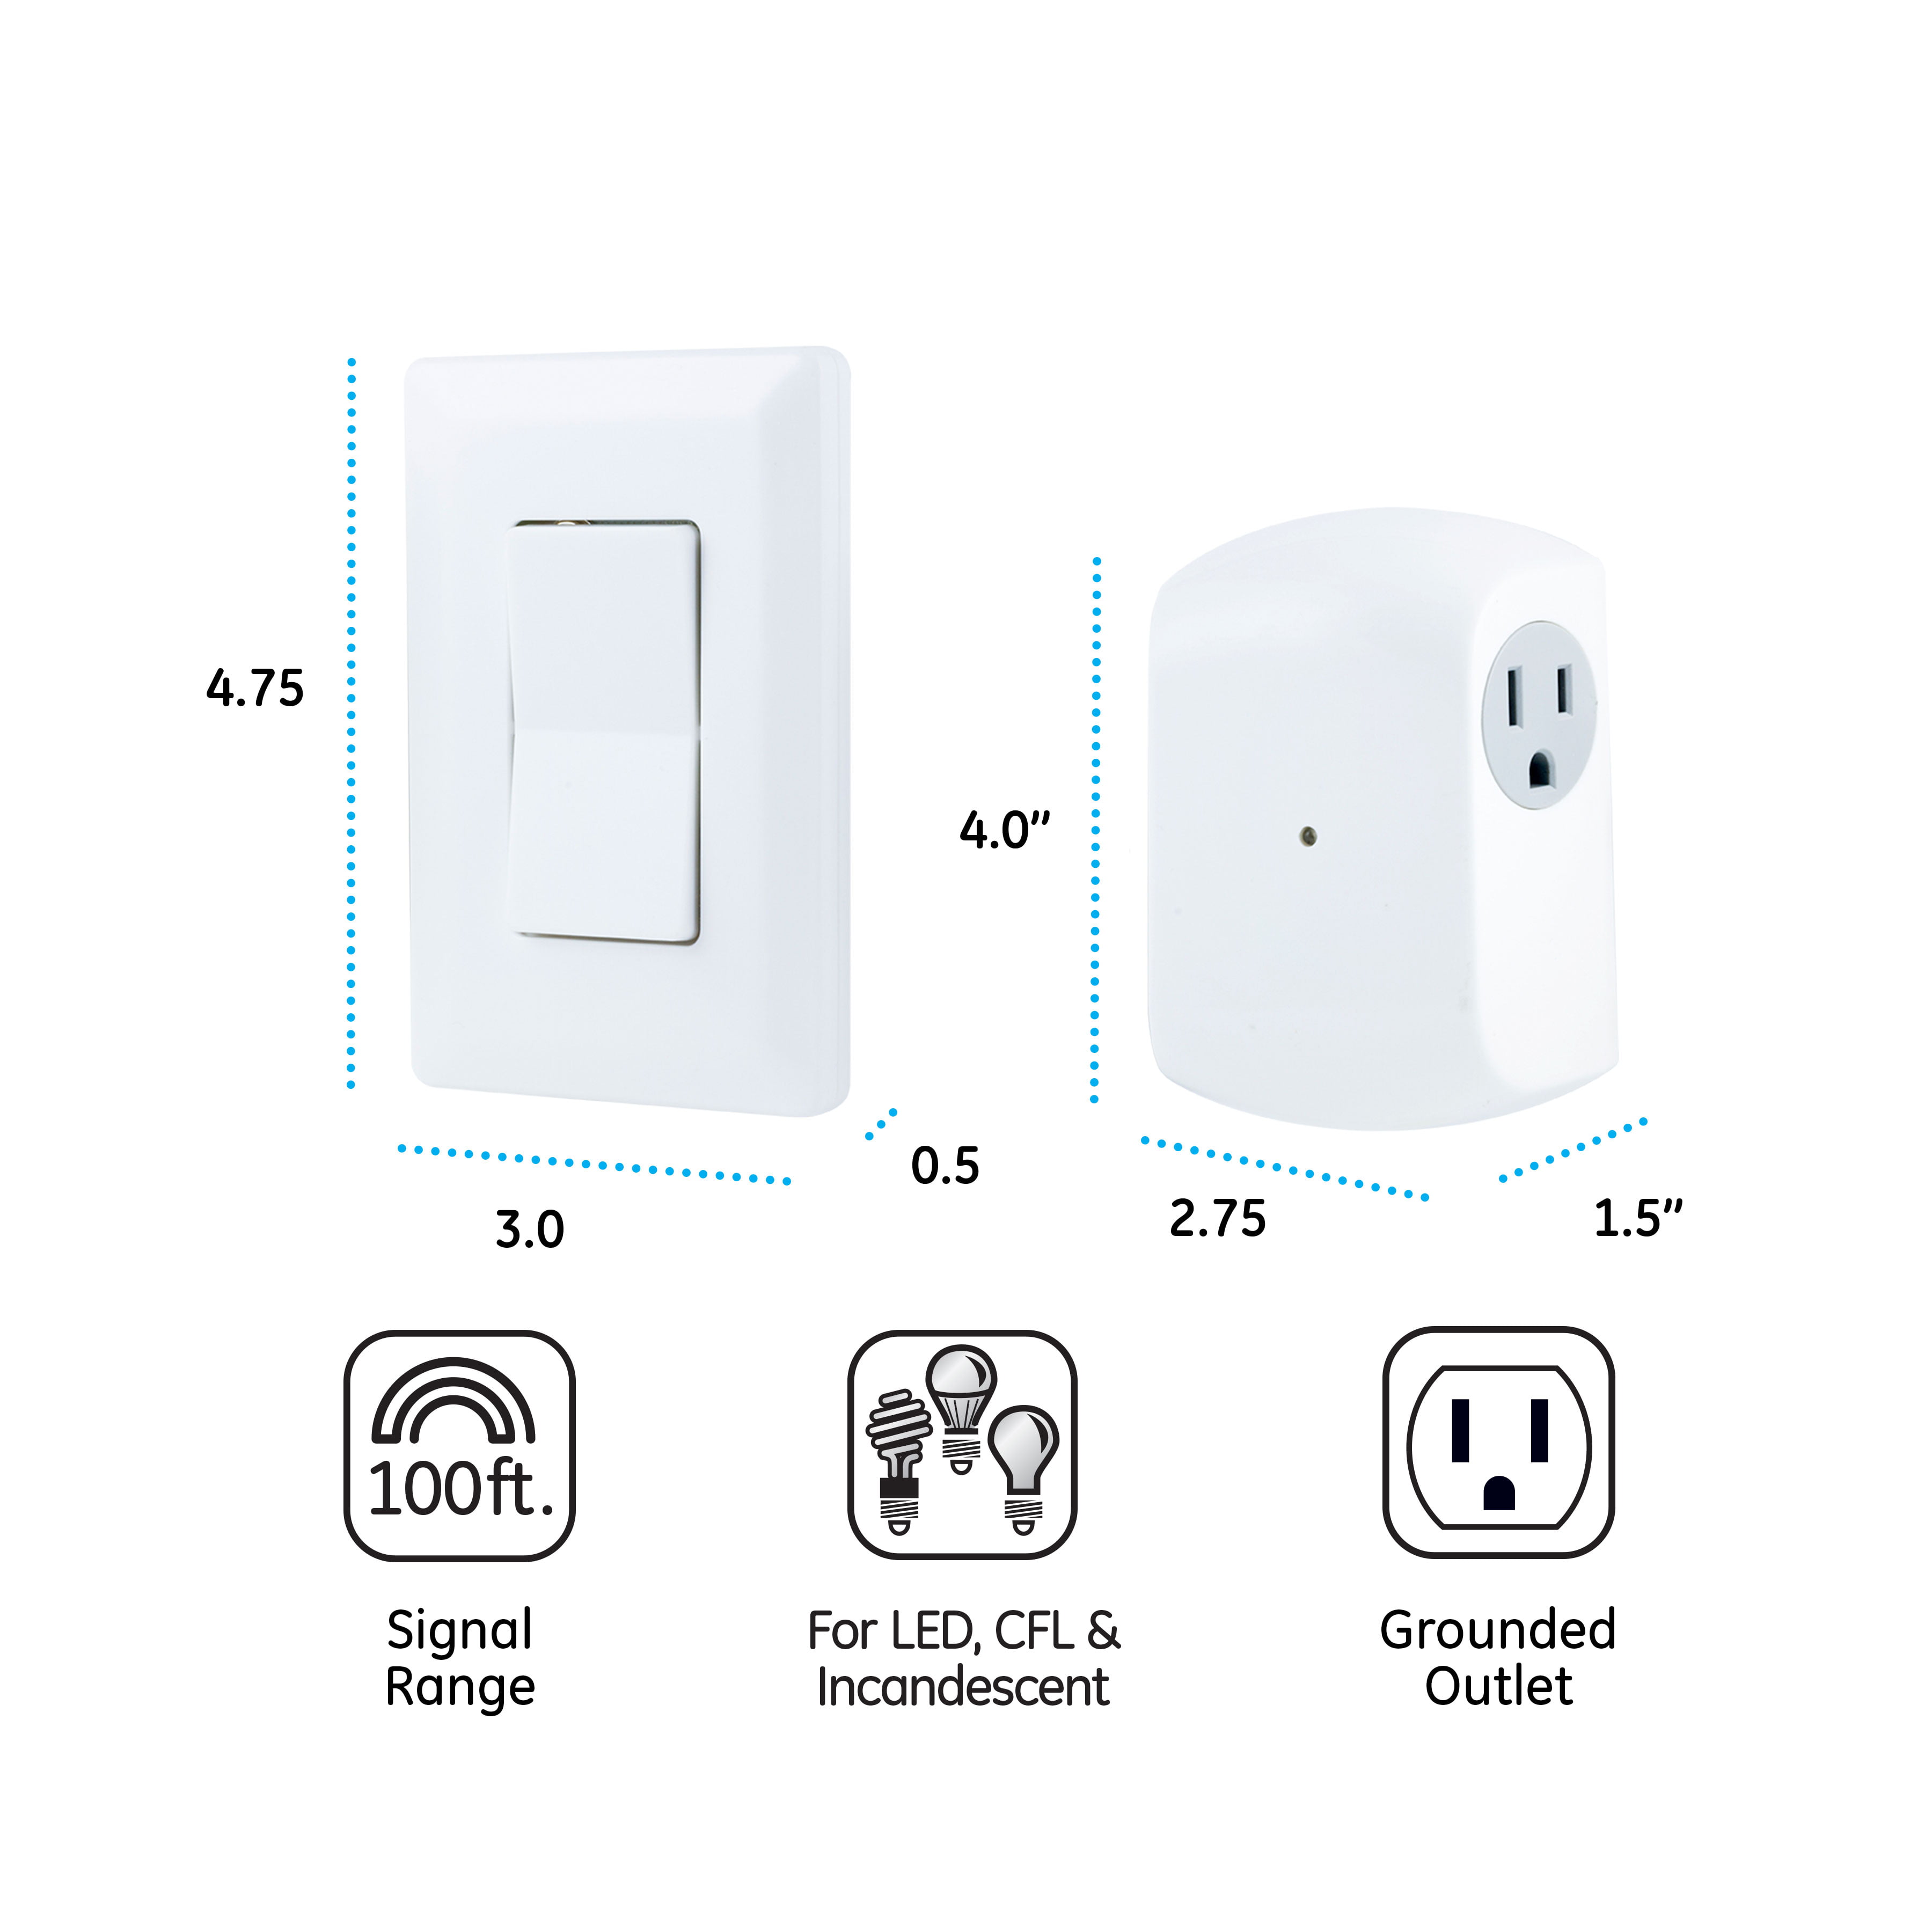 GE Wireless Wall Switch Lighting Control, White